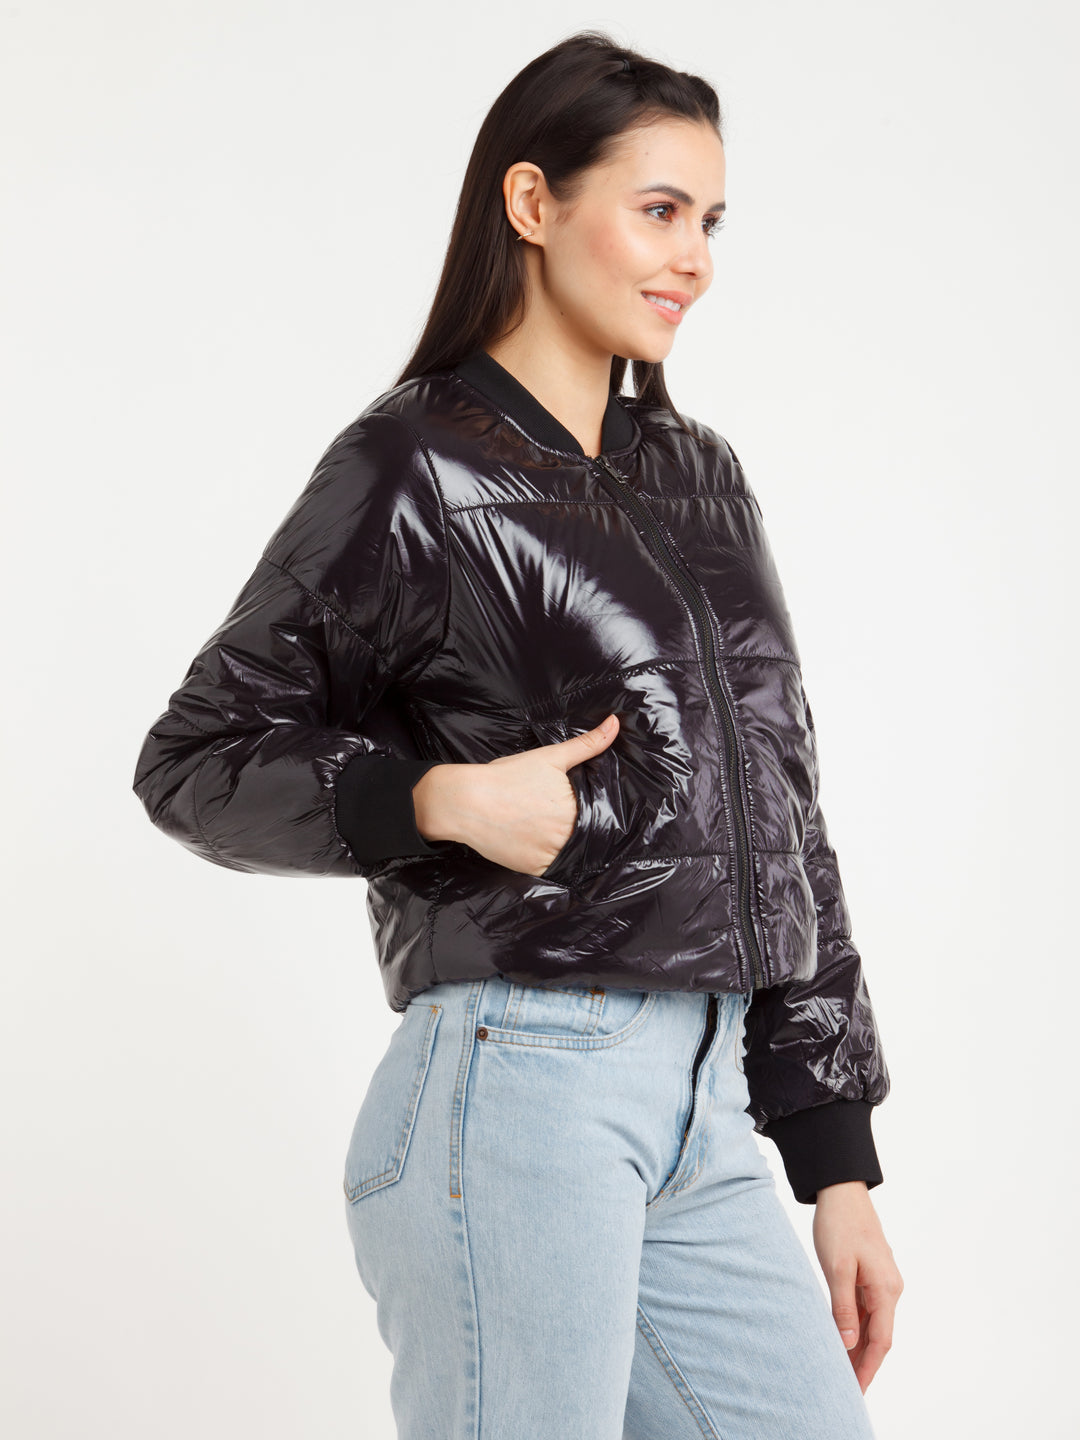 Black Solid Jacket For Women